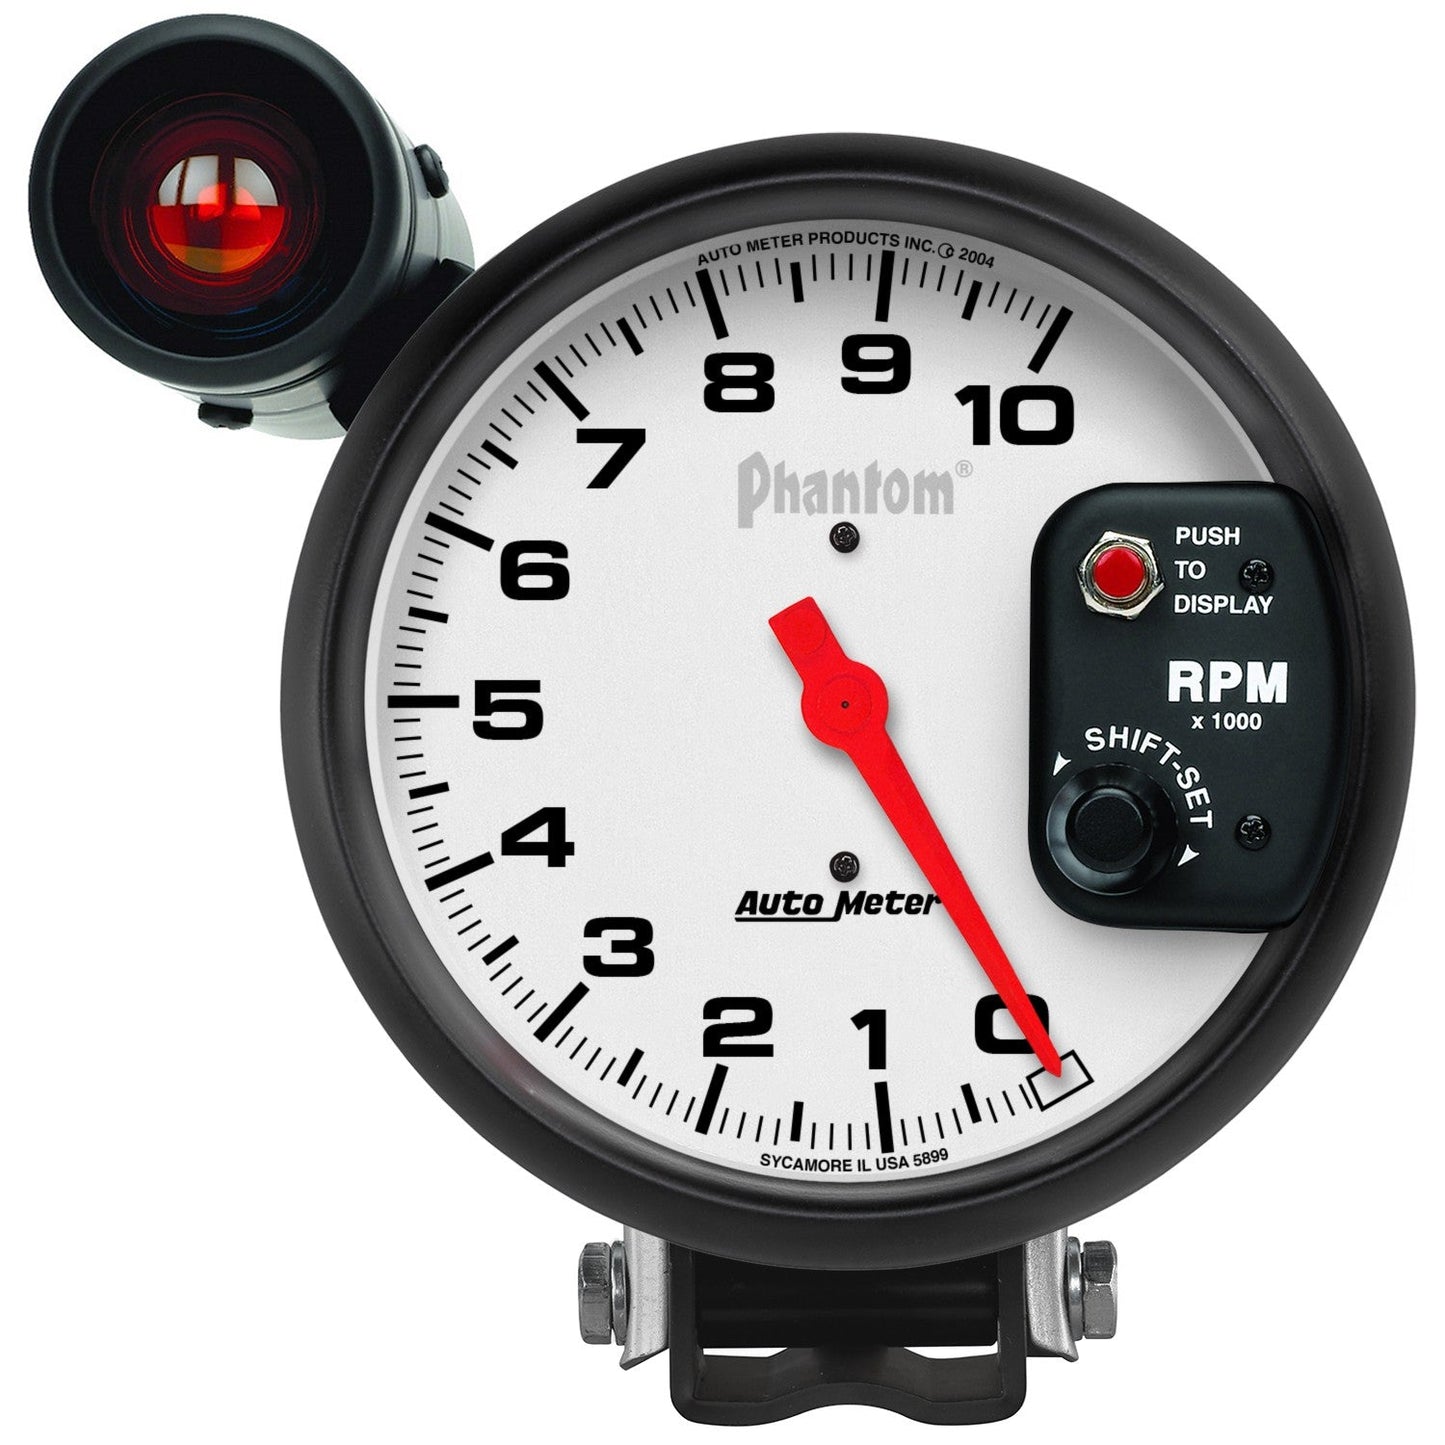 AutoMeter - 5" PEDESTAL TACHOMETER, 0-10,000 RPM, PHANTOM (5899)